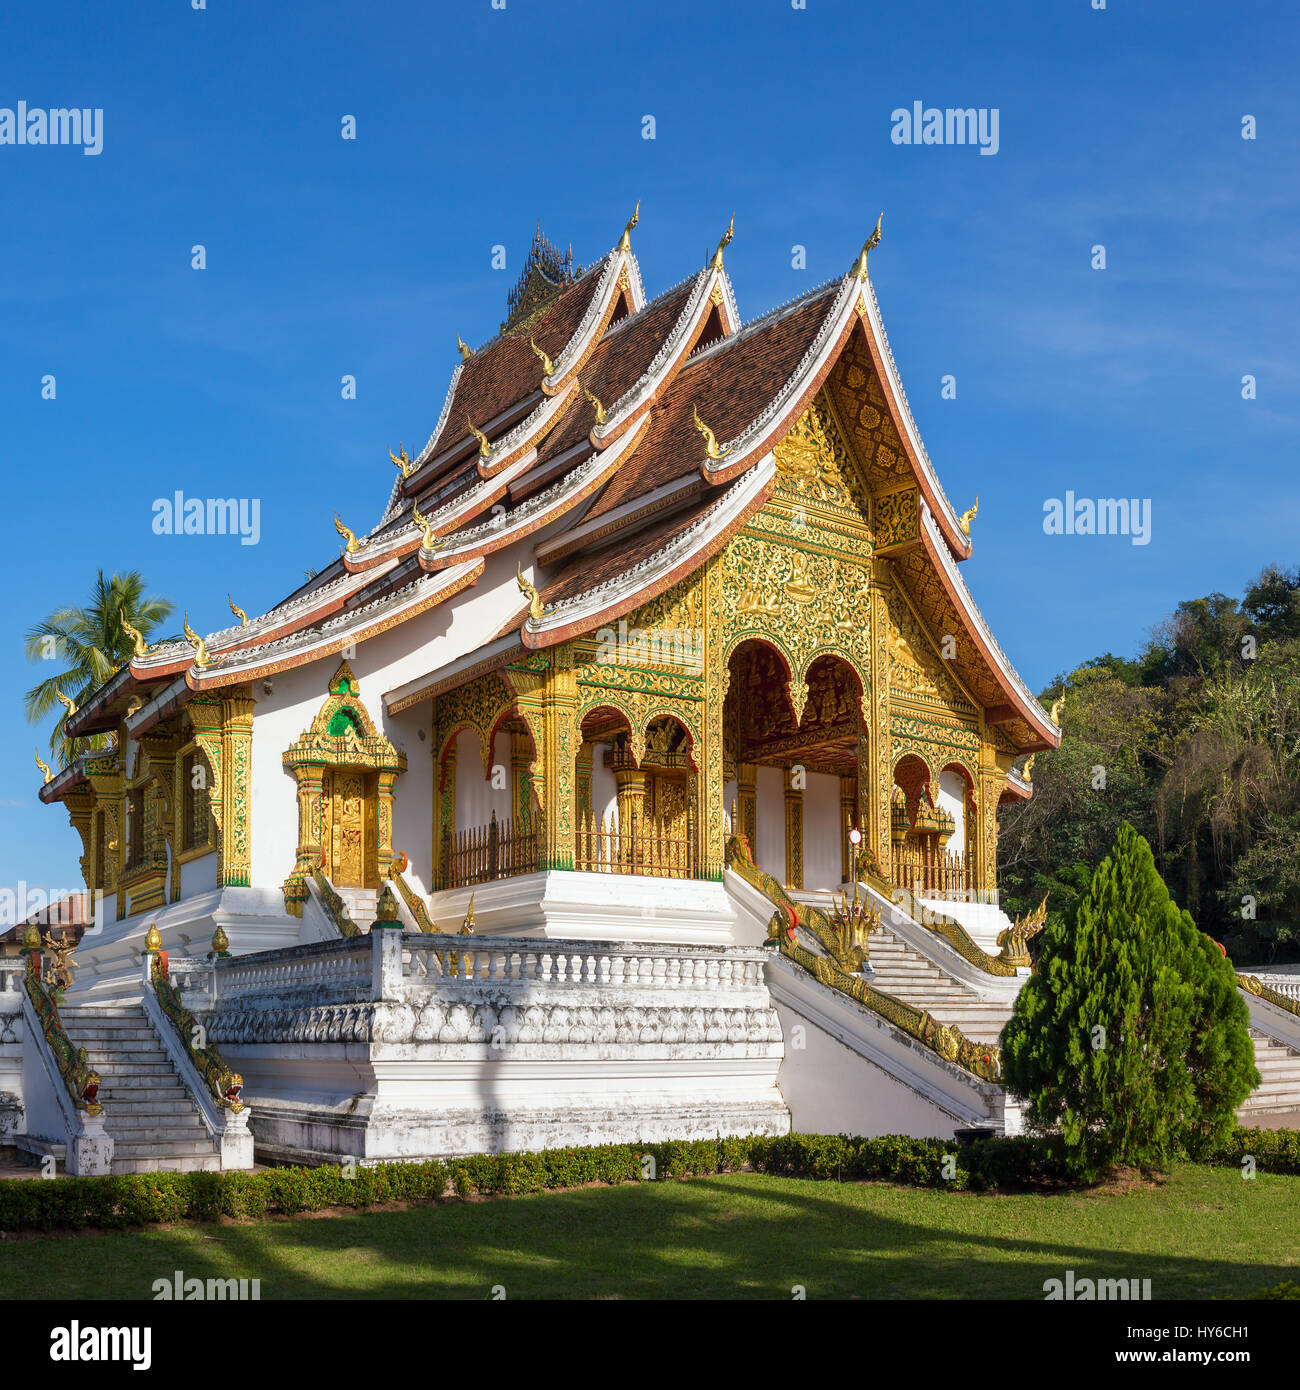 Haw Pha Bang temple in Luang Prabang, Laos Stock Photo